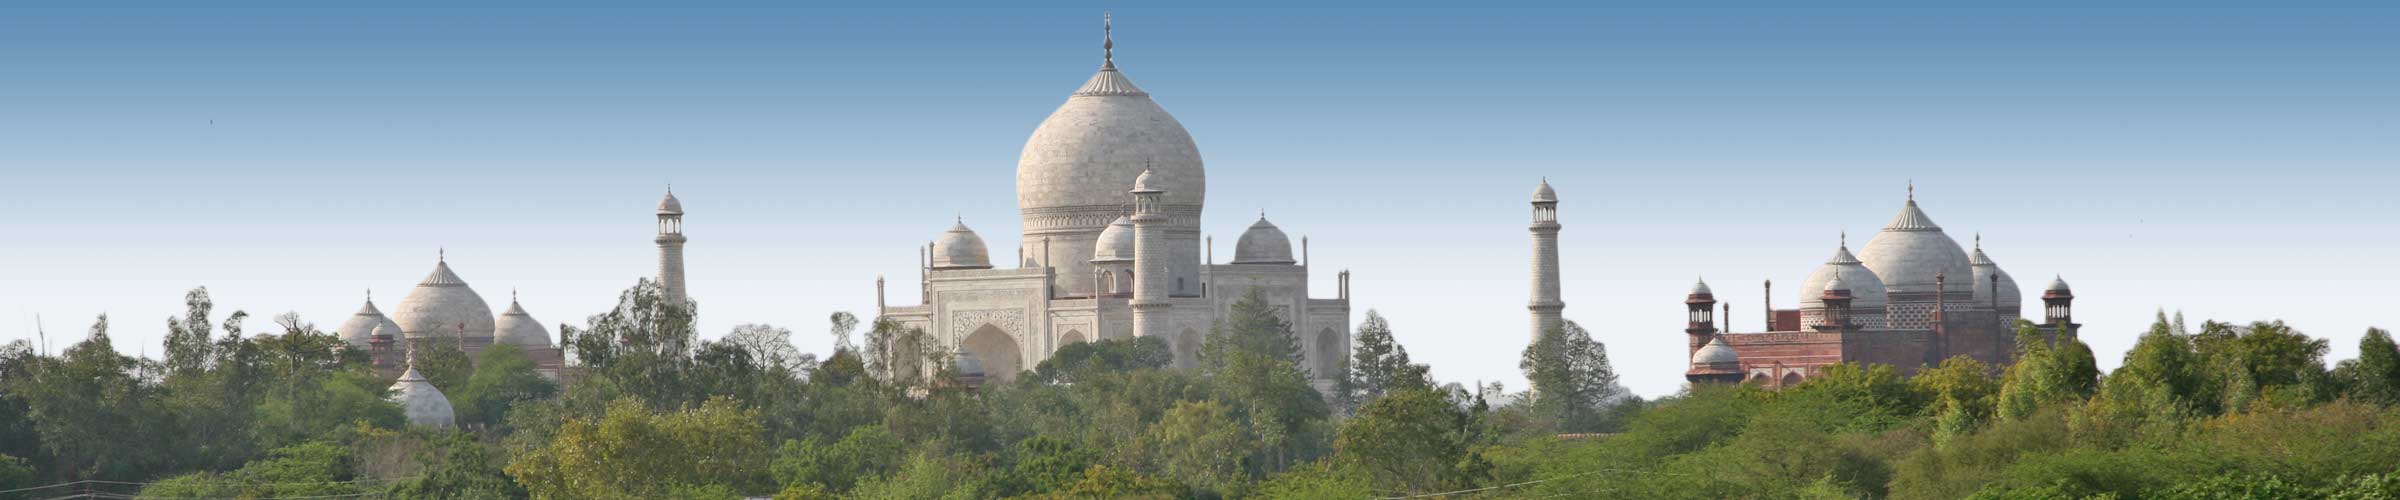 Indian Skyline - Taj Mahal